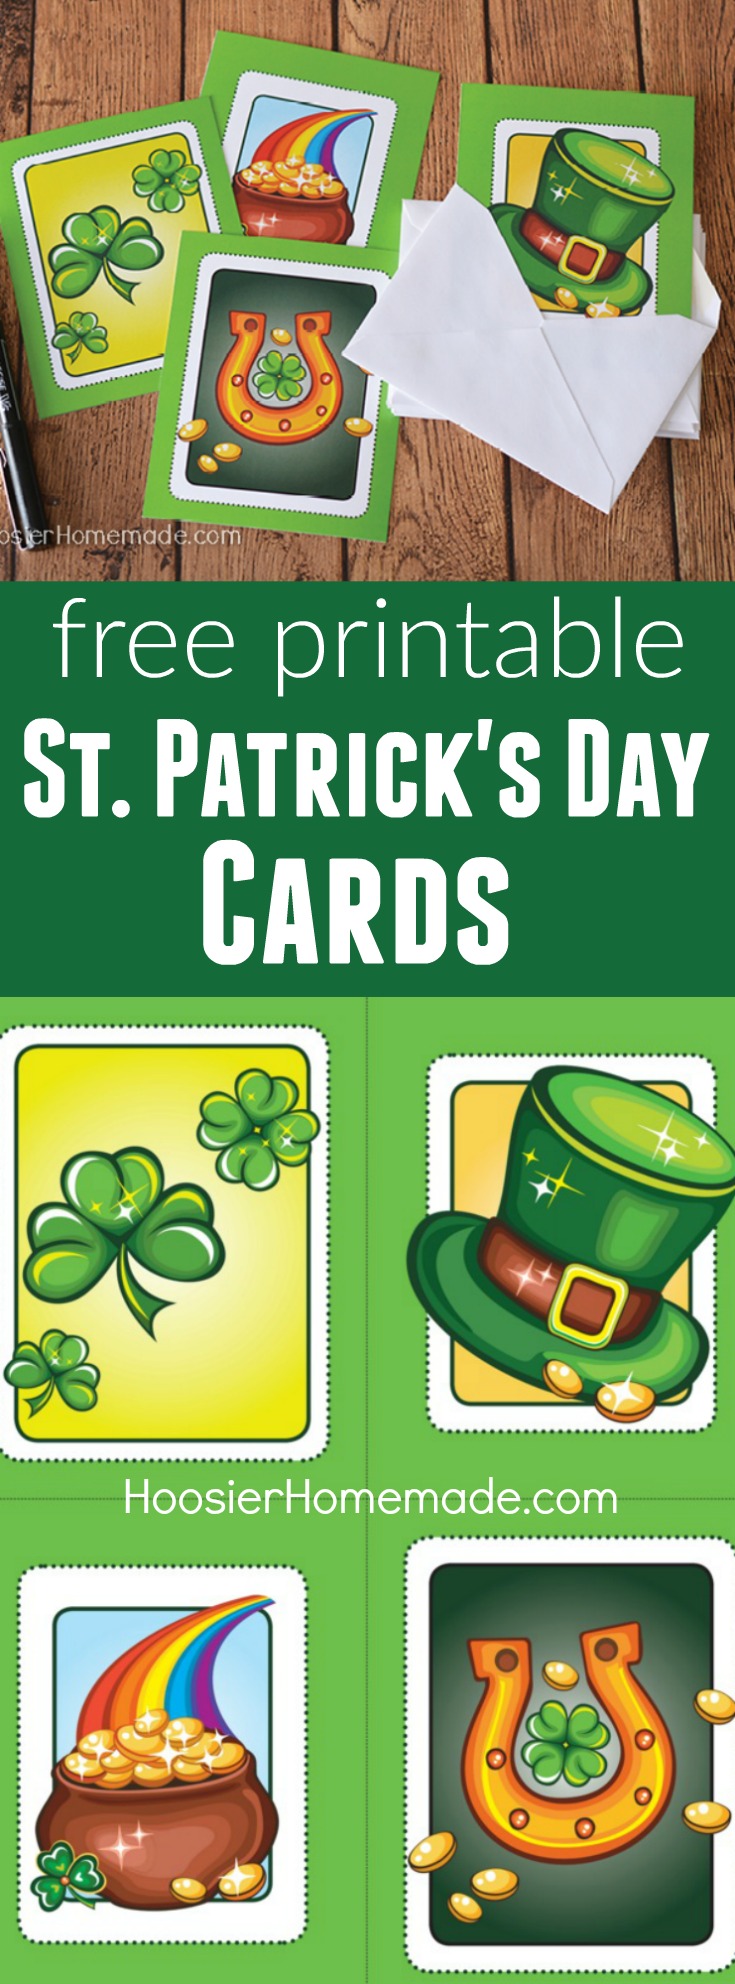 Printable St. Patrick's Day Cards Hoosier Homemade